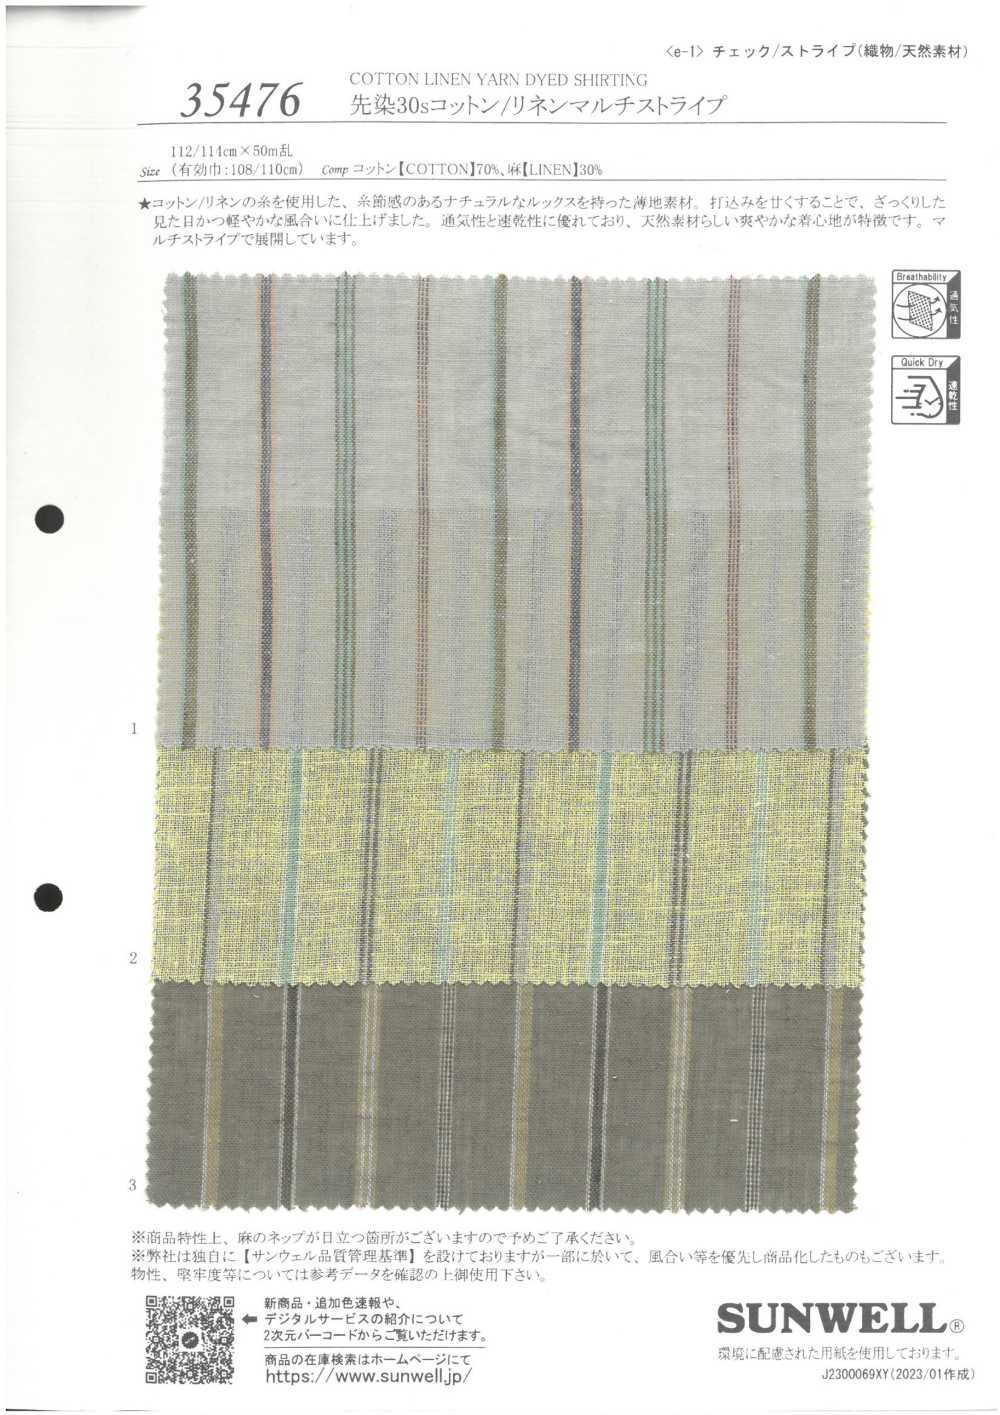 35476 Hilado Teñido 30 Un Solo Hilo Algodón/lino Multi-raya[Fabrica Textil] SUNWELL